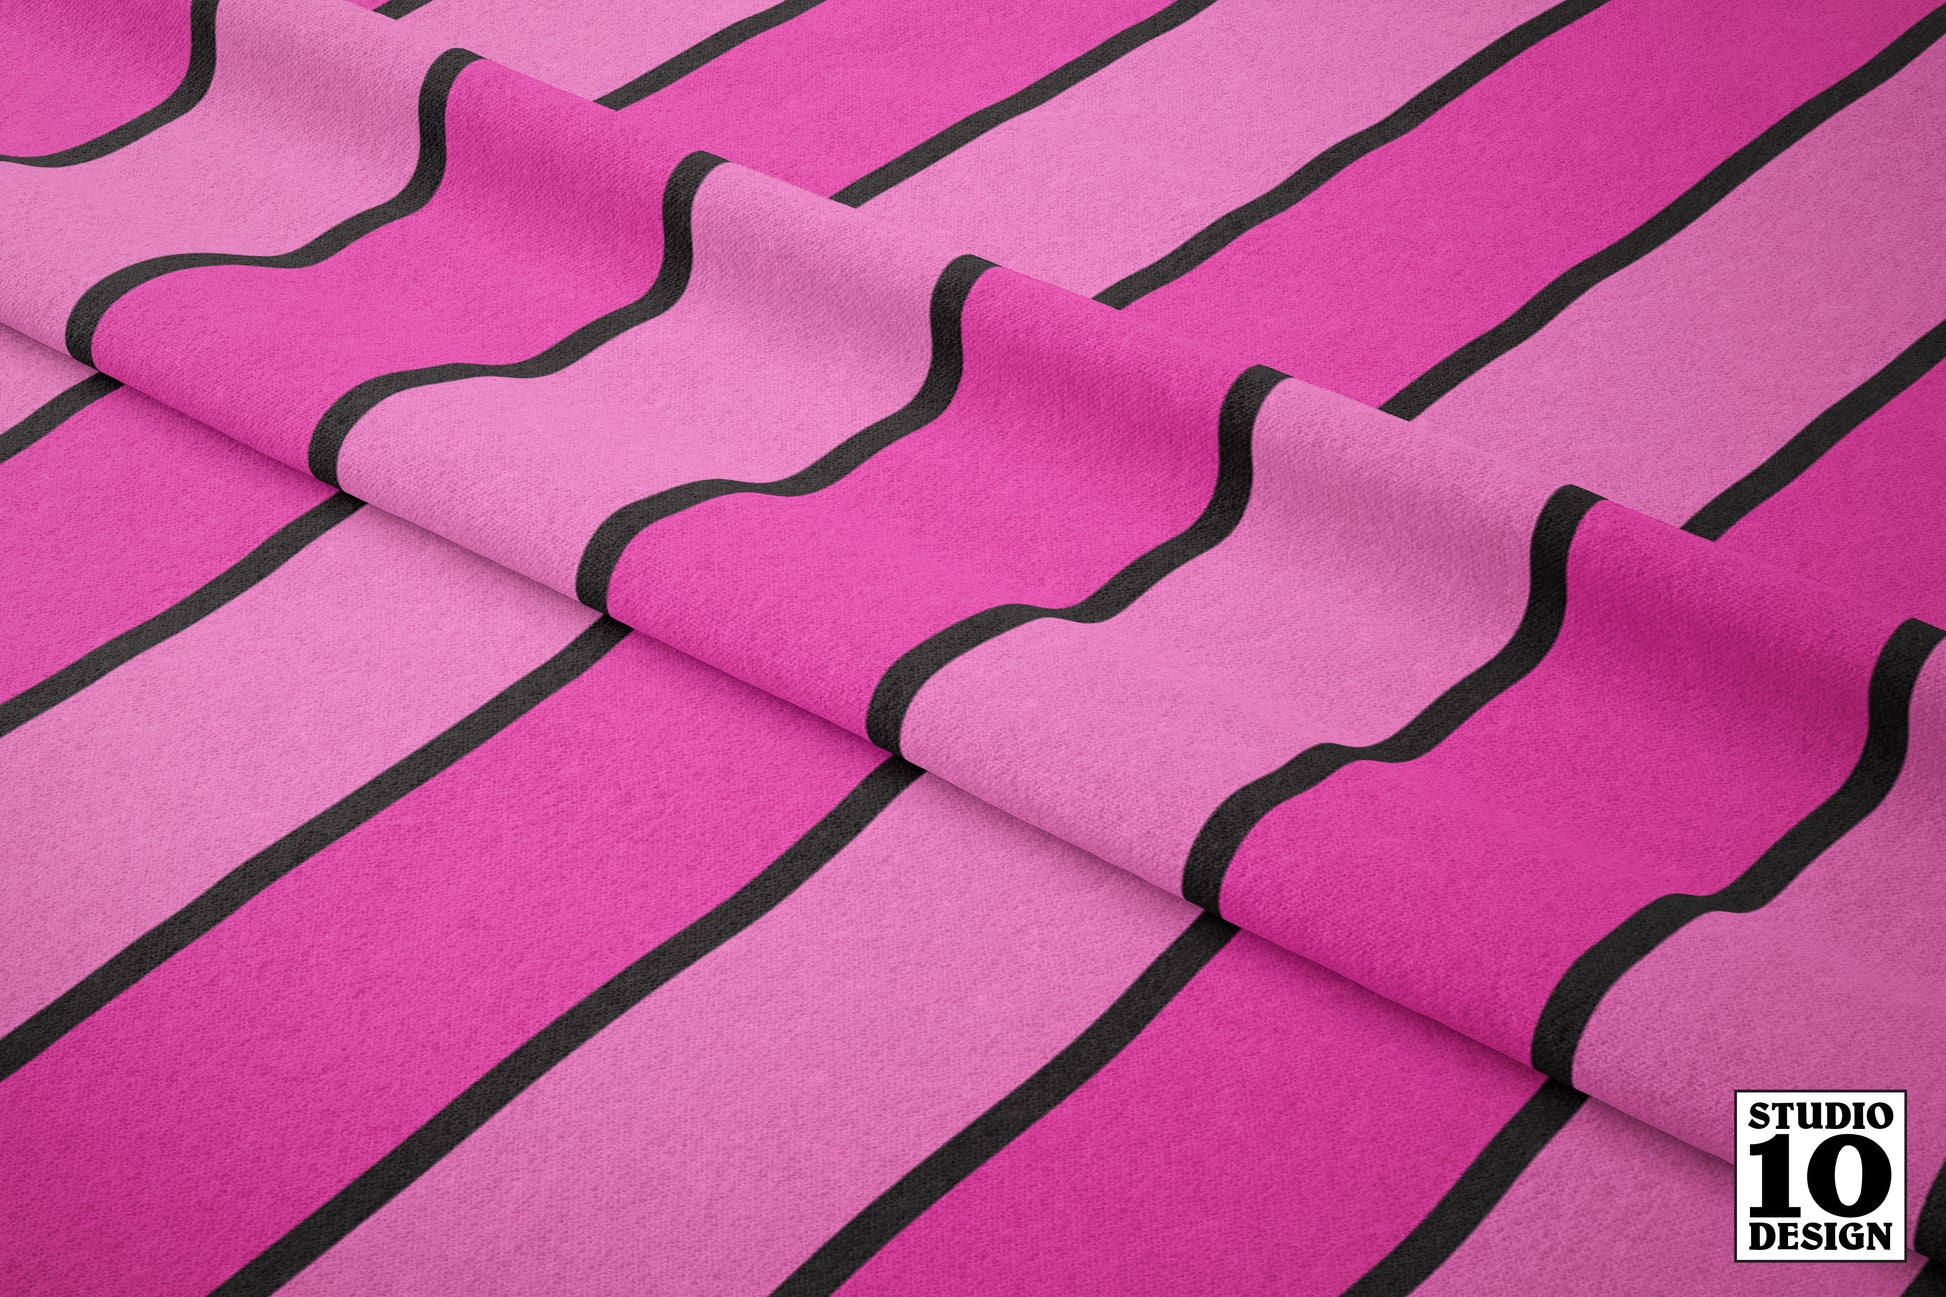 Vertical Stripes, Pink Printed Fabric by Studio Ten Design